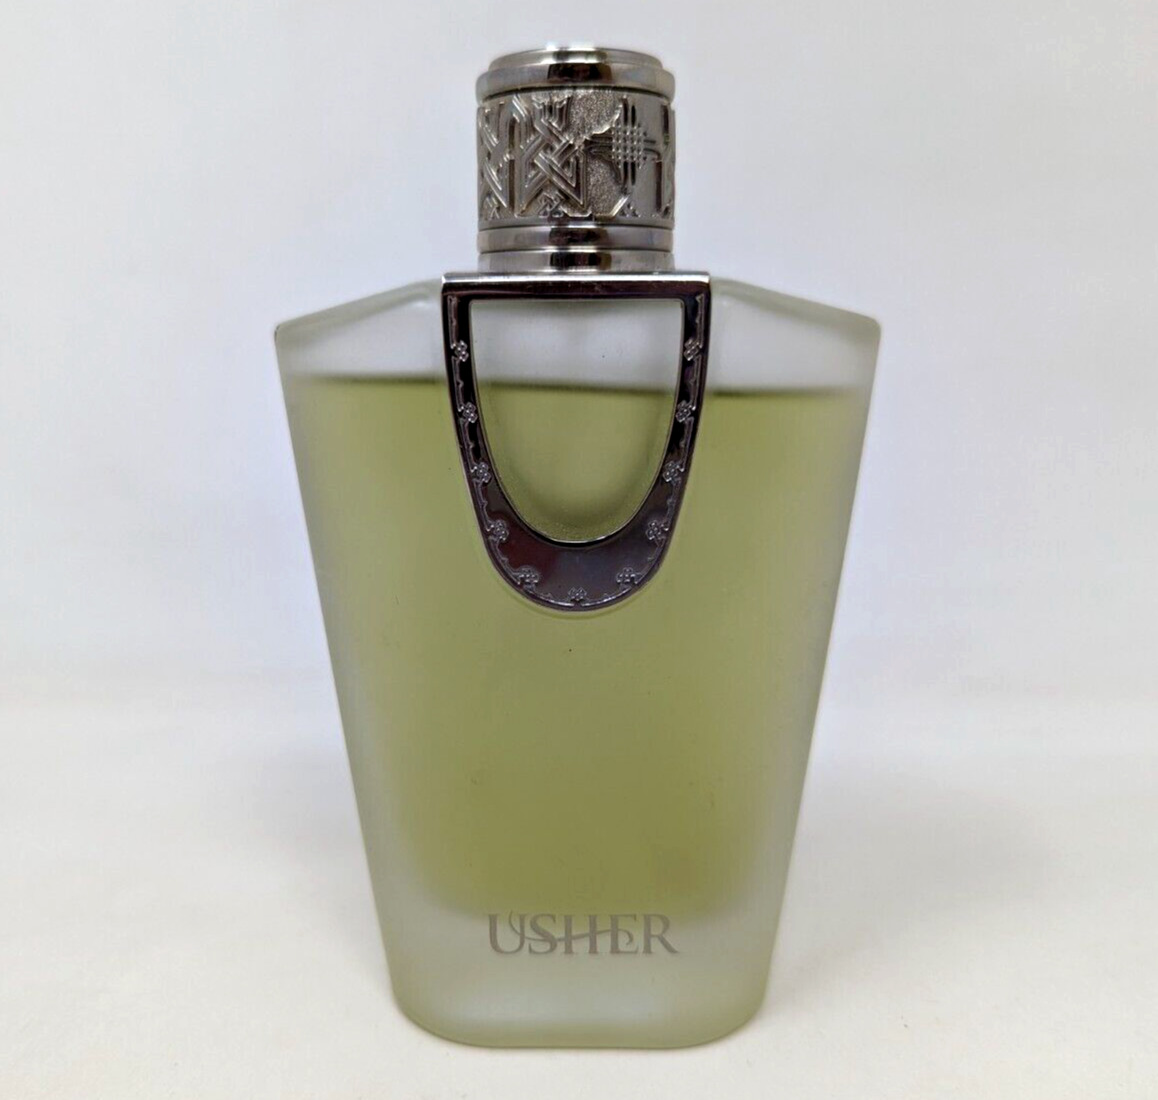 VTG Usher Eau De Parfum EDP Perfume Spray Vaporisateur 3.4 oz 100 mL Bottle RJ22